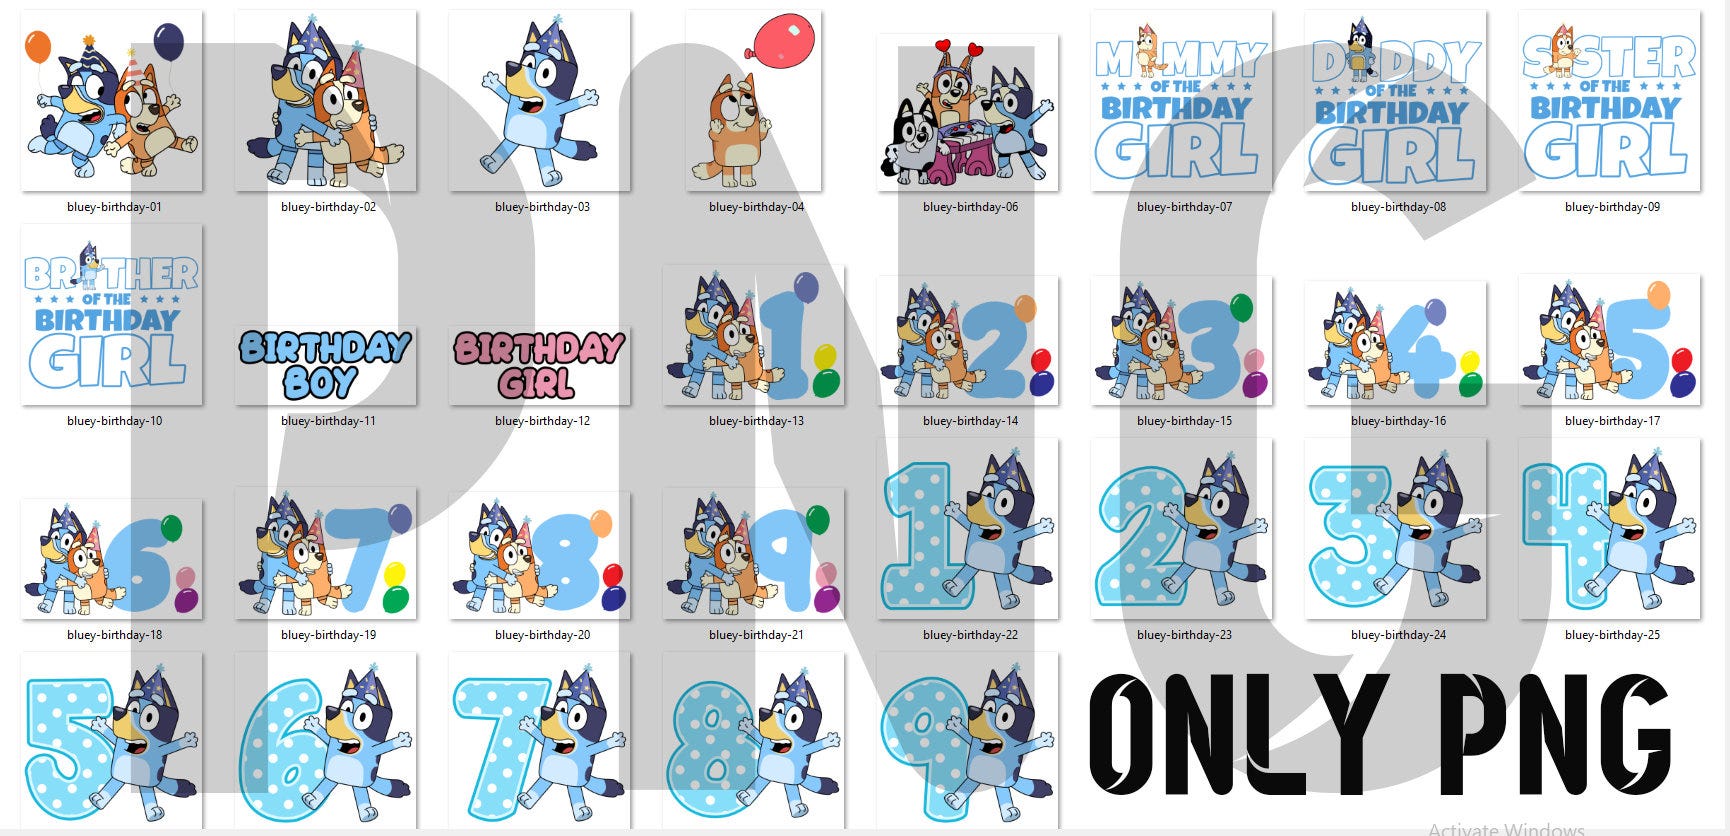 Happy Birthday Number Bluey Dog PNG, Bluey Dog Birthday PNG, Birthday Boy PNG, Birthday Girl png Sublimation, Instant Download